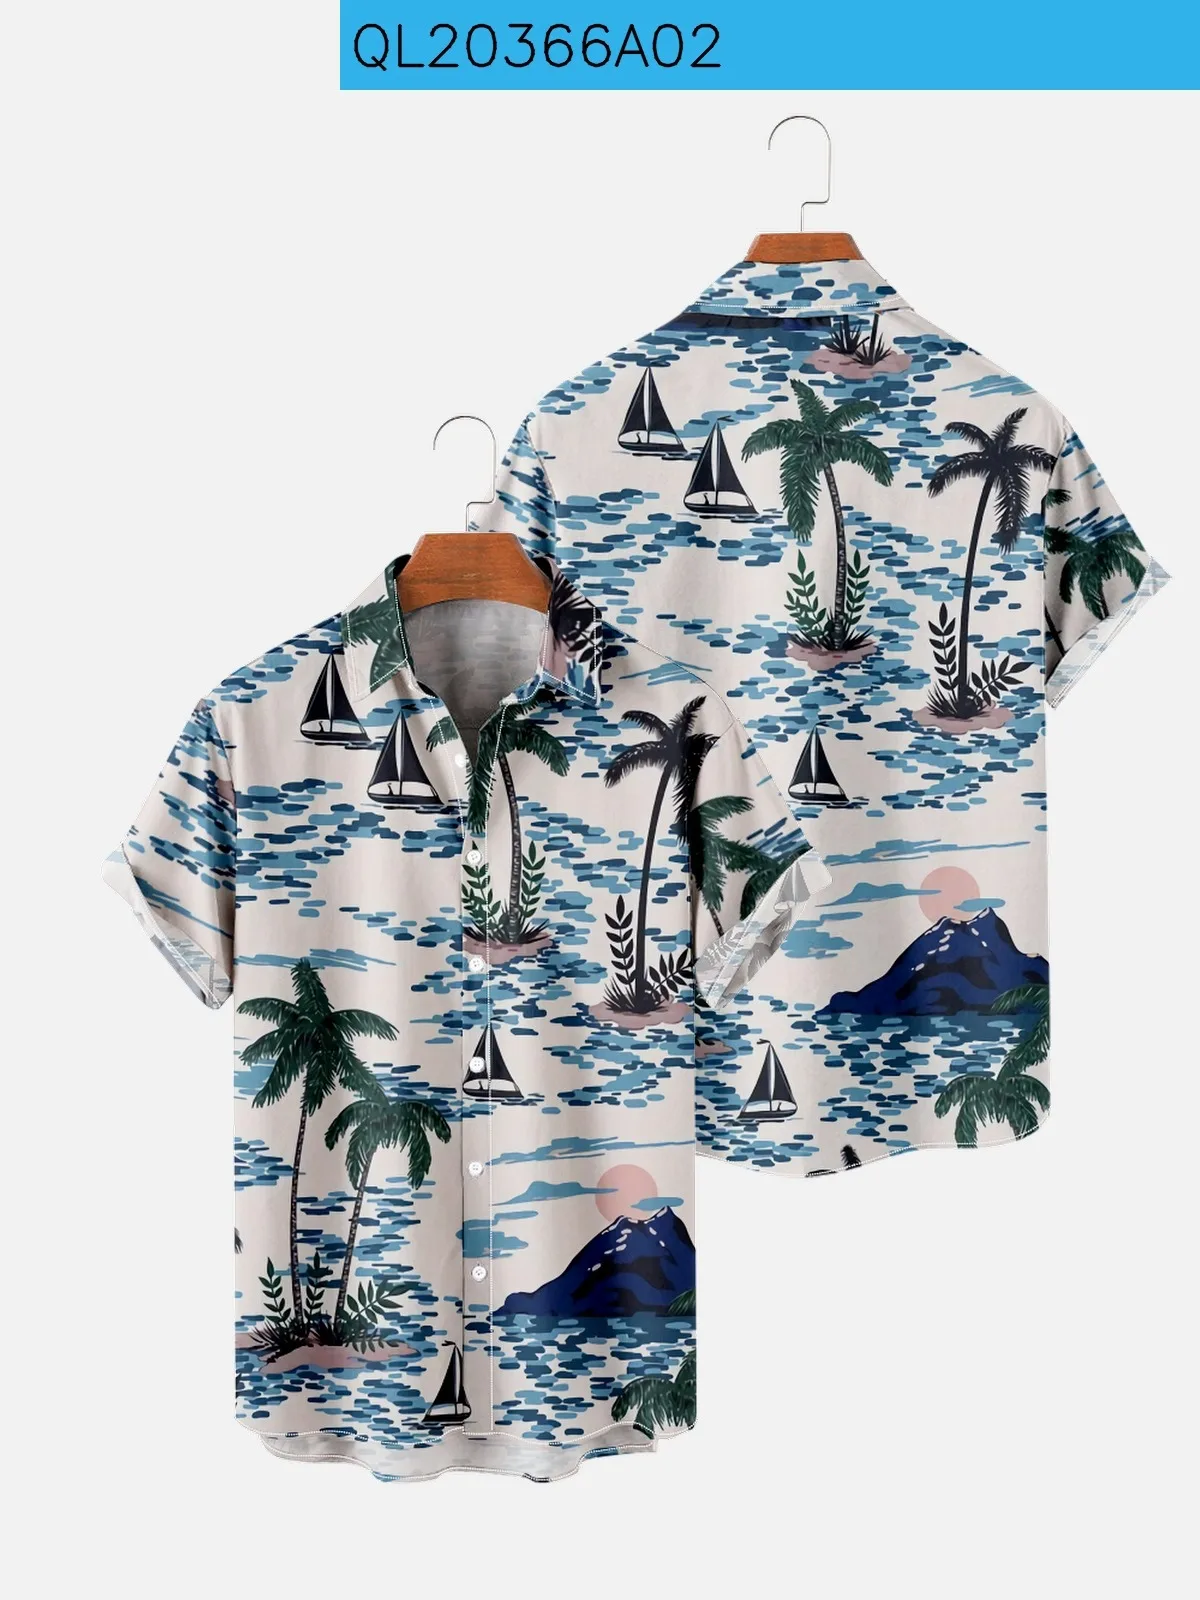 

New Men's Hawaiian Shirts Tress Print Vacation Beach Wear Blue Tops with Pockets Summer Plus Size